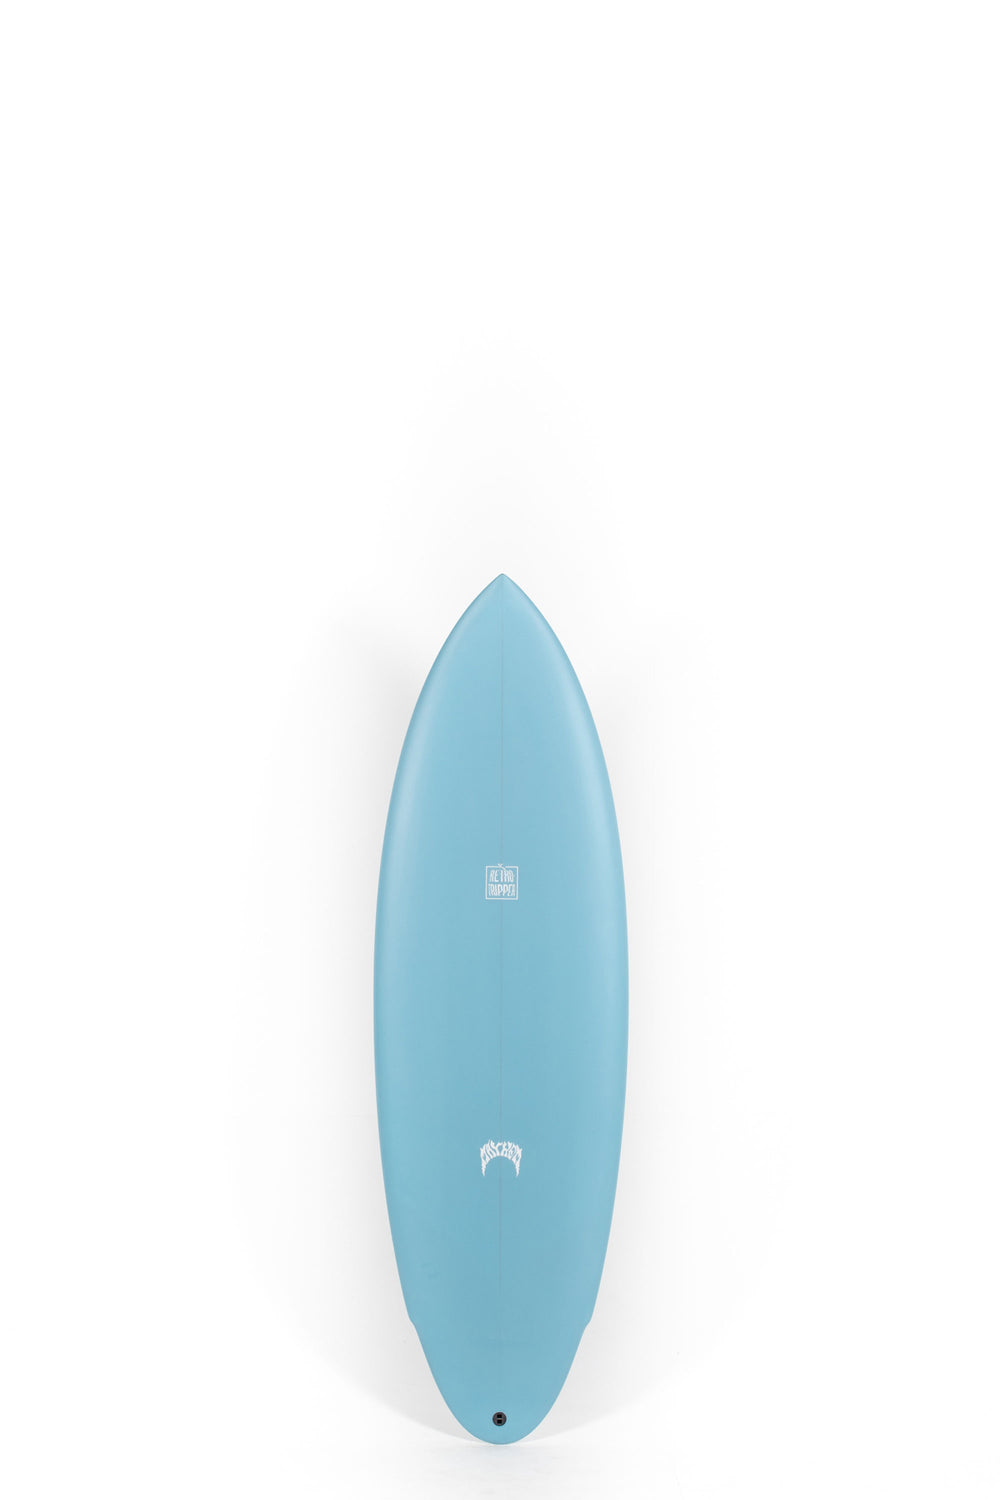 Pukas Surf Shop - Lost Surfboard - RETRO TRIPPER by Matt Biolos - 5'6